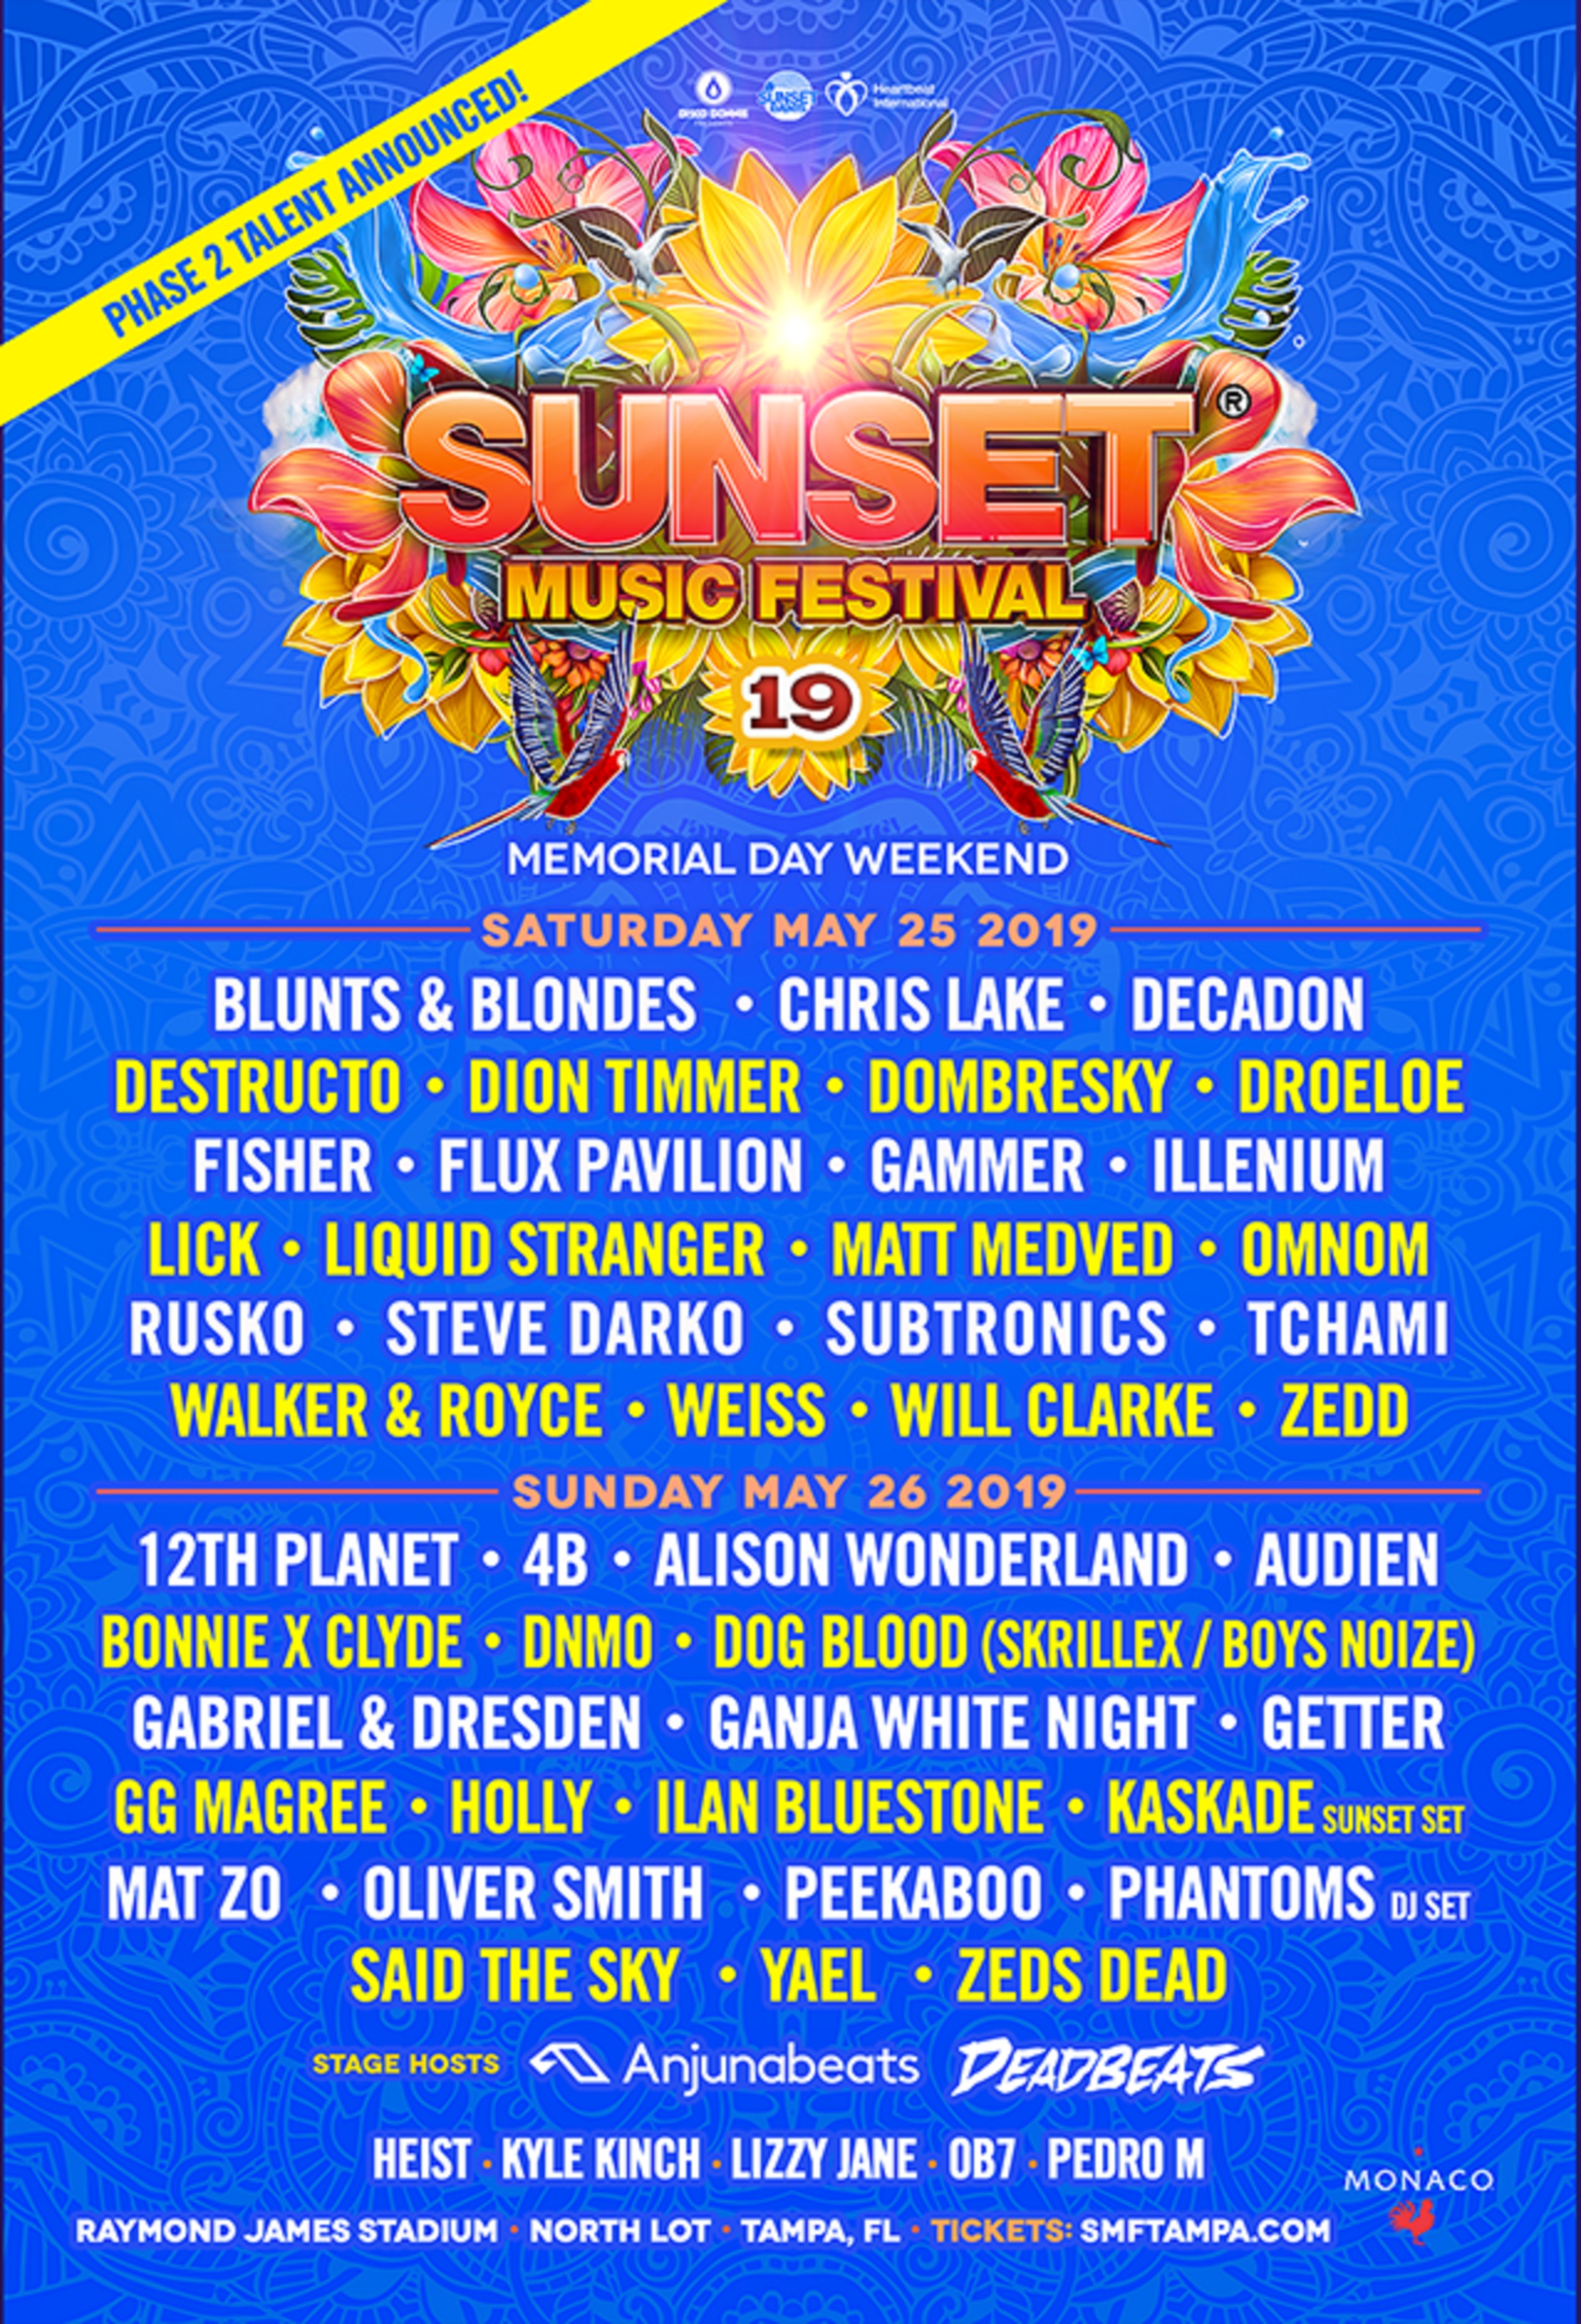 Sunset Music Fest announces Phase 2 lineup